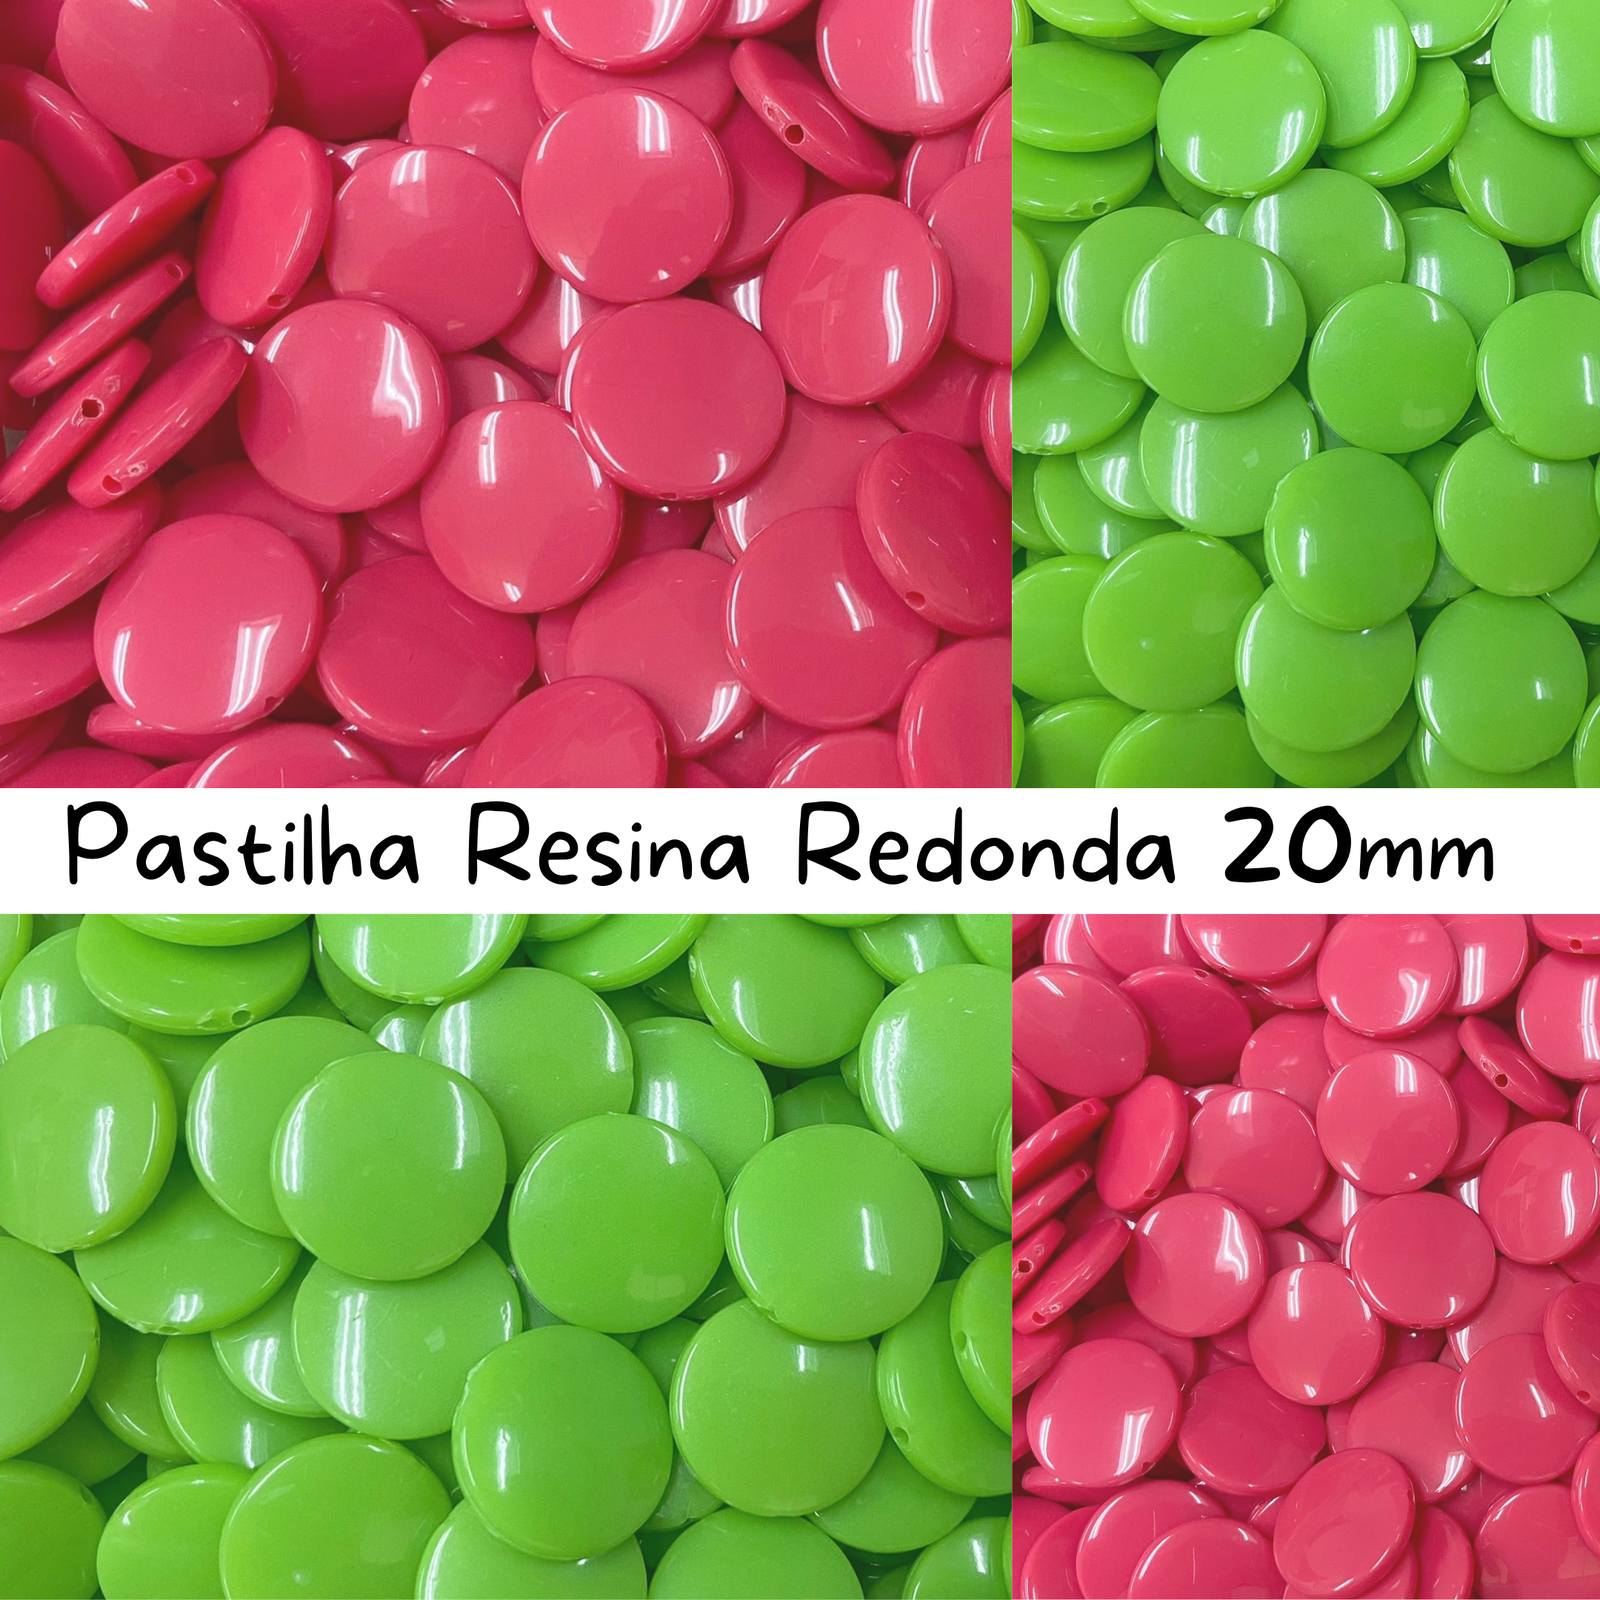 Pastilha Resina Redonda 20mm - 500g